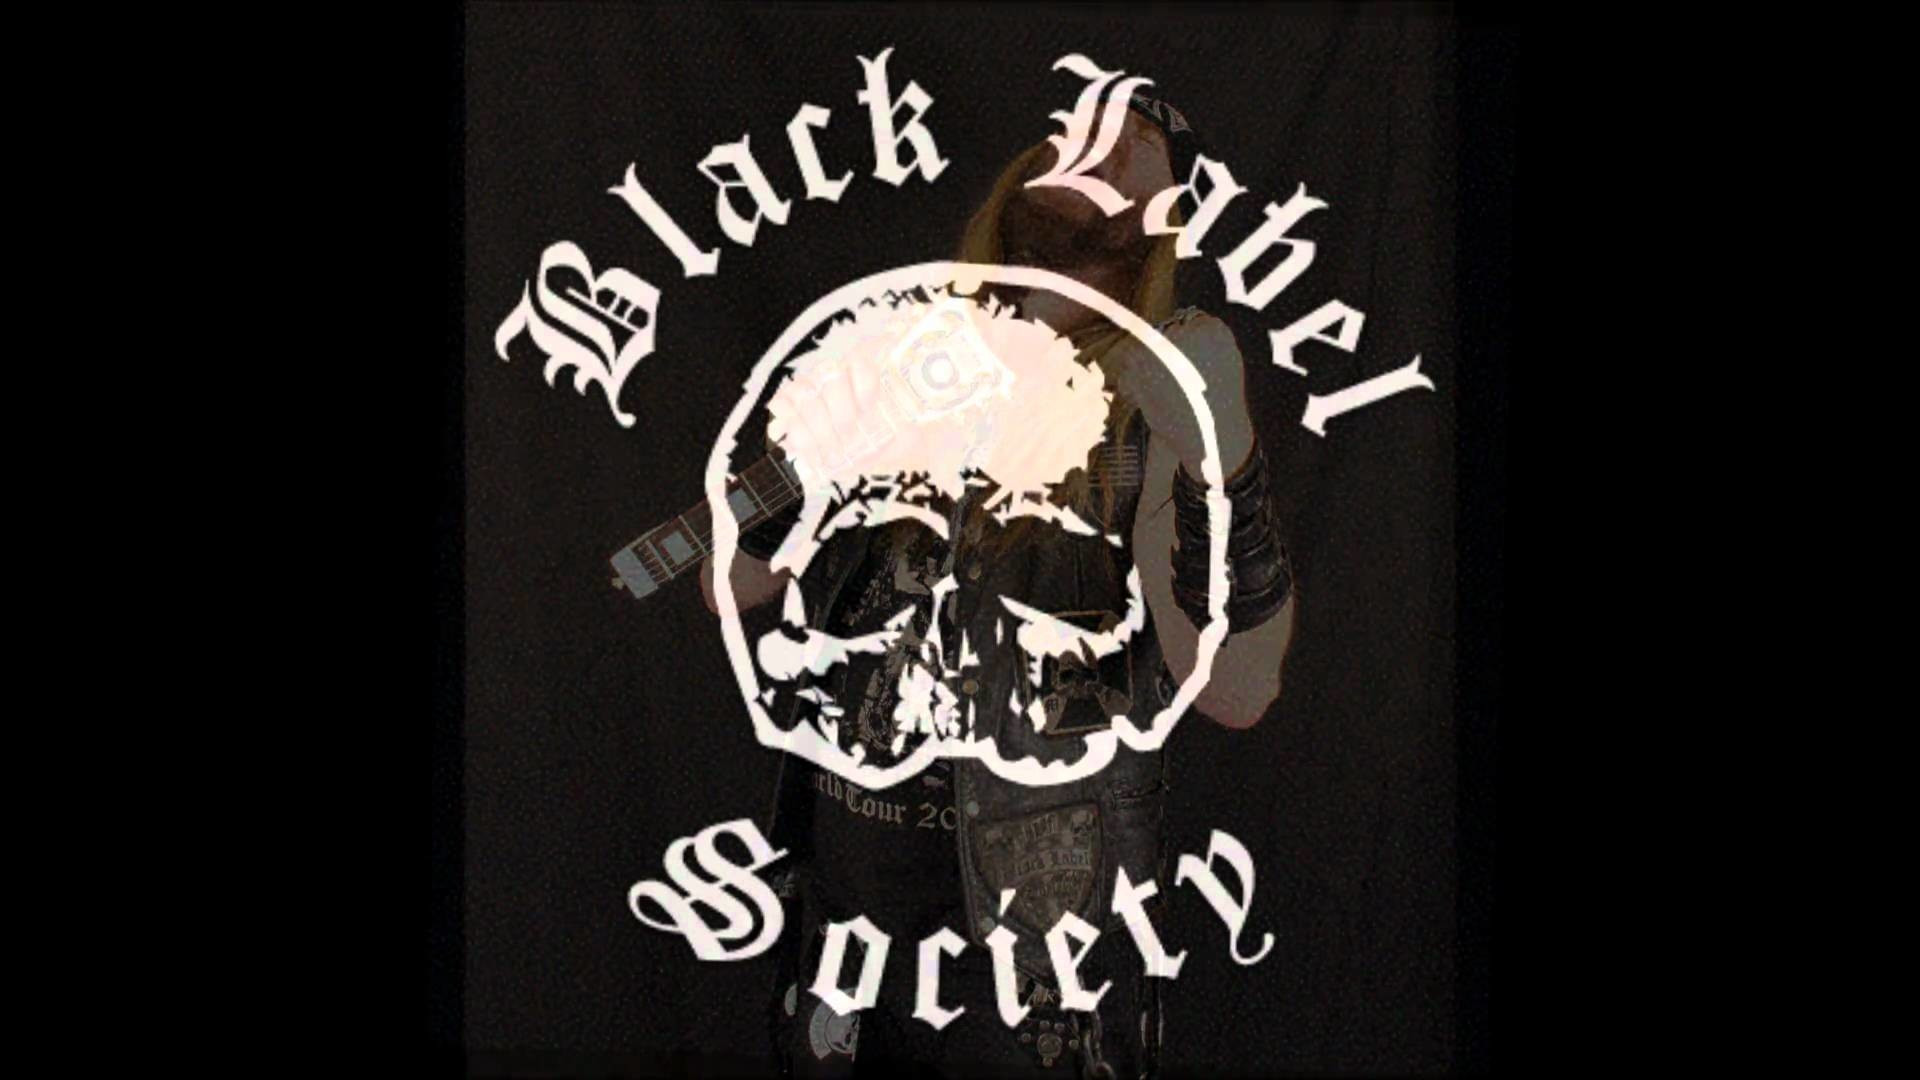 Zakk Wylde  Black Label Society Black Label Society Zakk Wylde John  JD DeServio John DeServio Will Hunt  The Song Remains Not The Same   Amazoncom Music